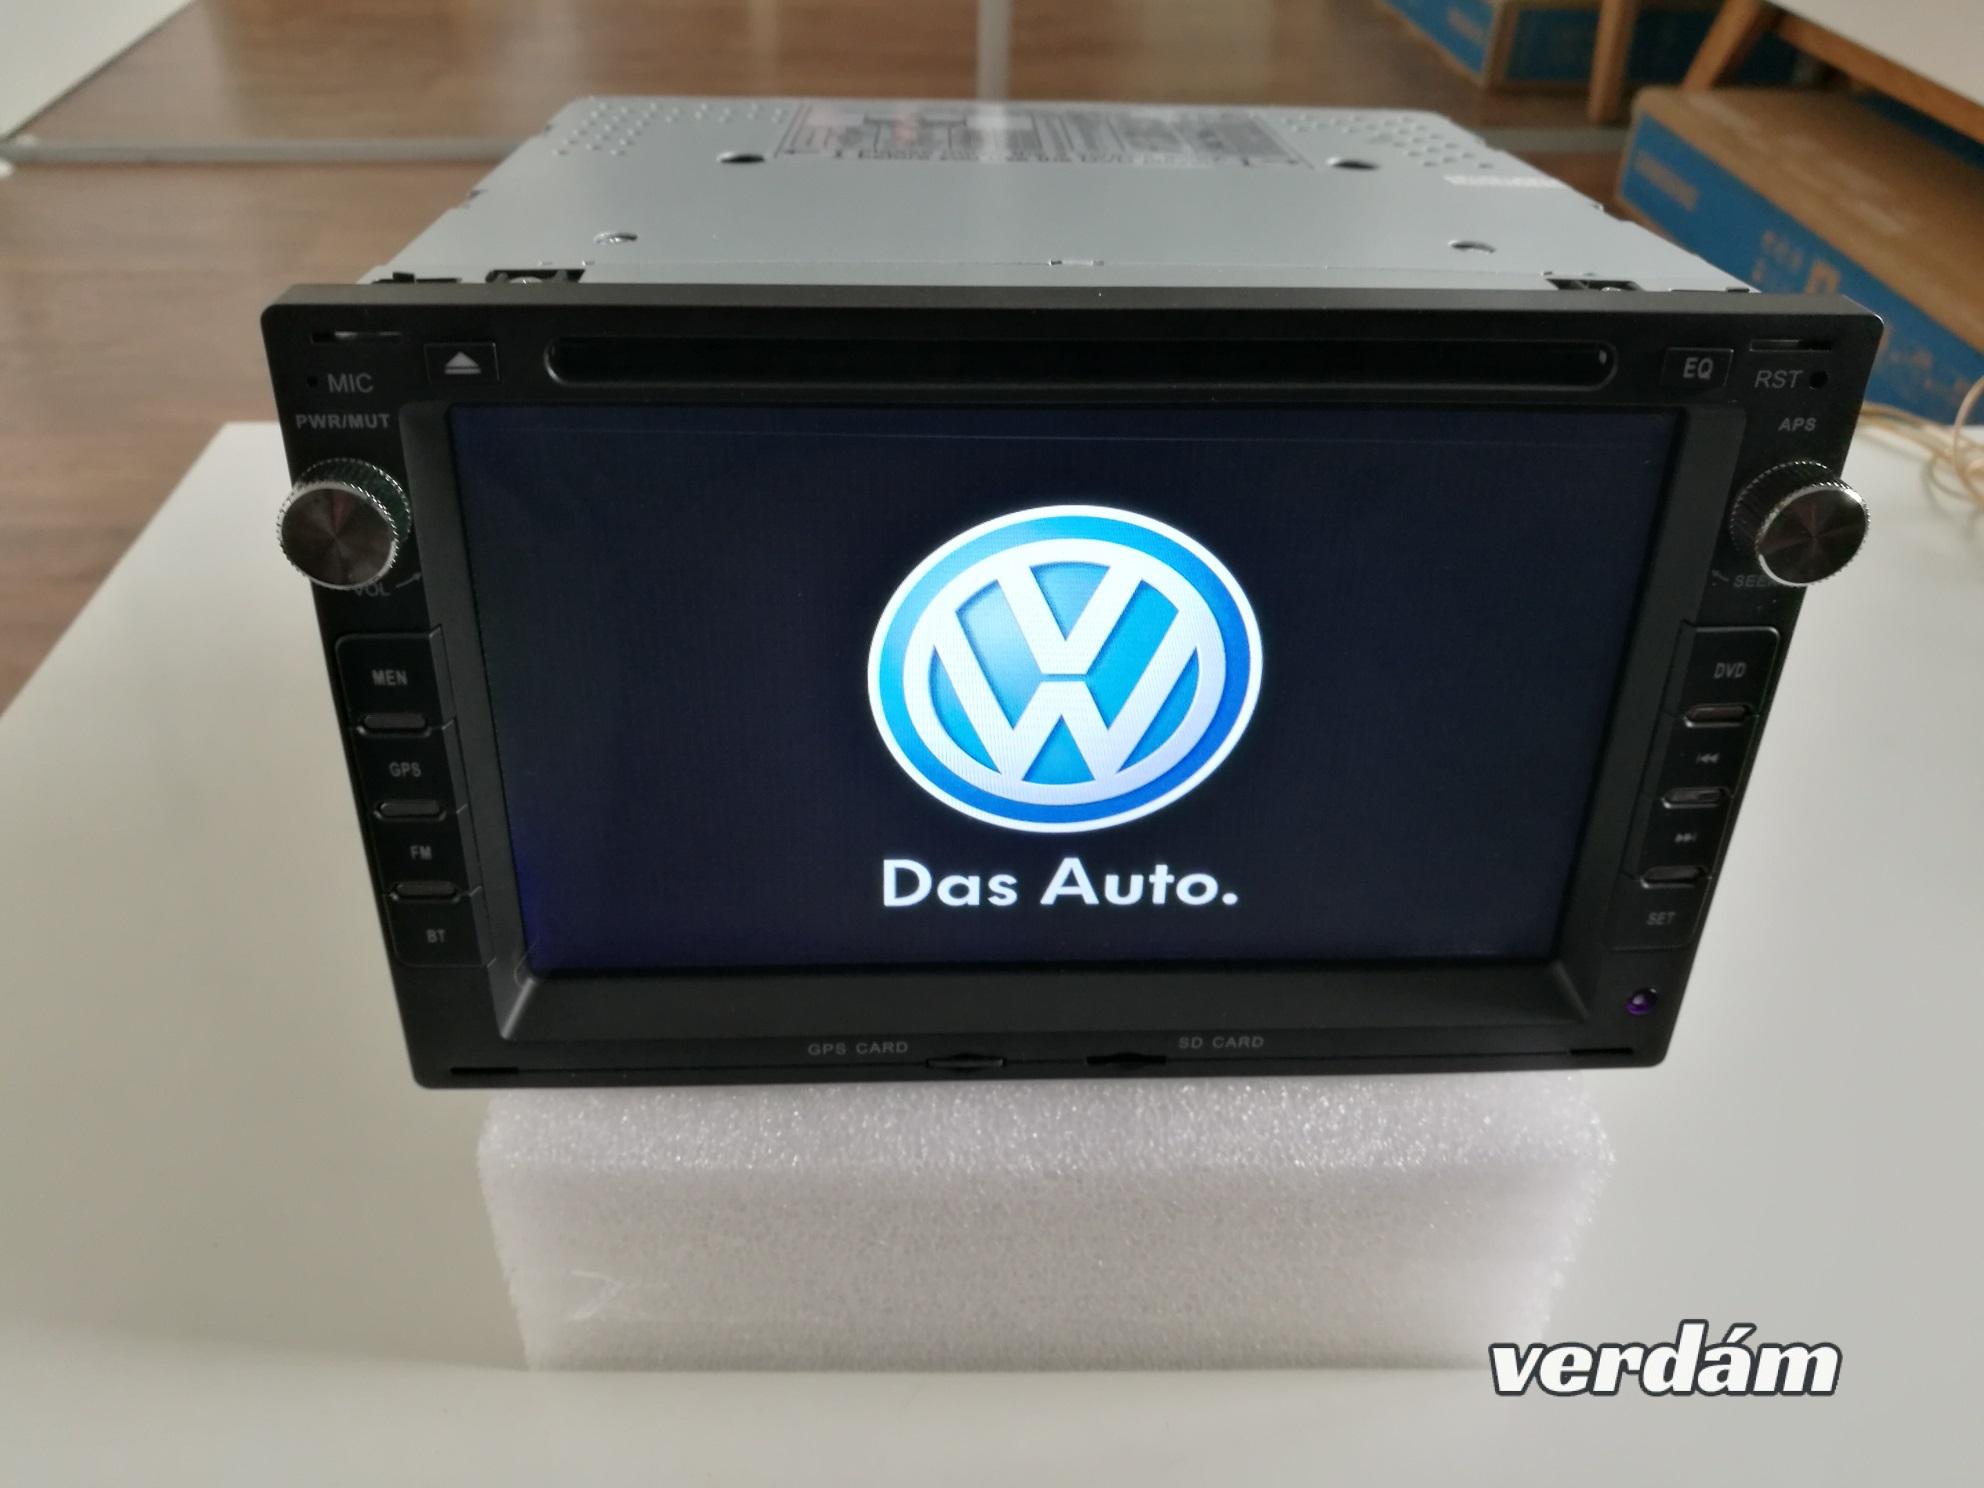 Eladó  Volkswagen Multimédia, WiFi, GPS, Bluetooth, 7 Inch,